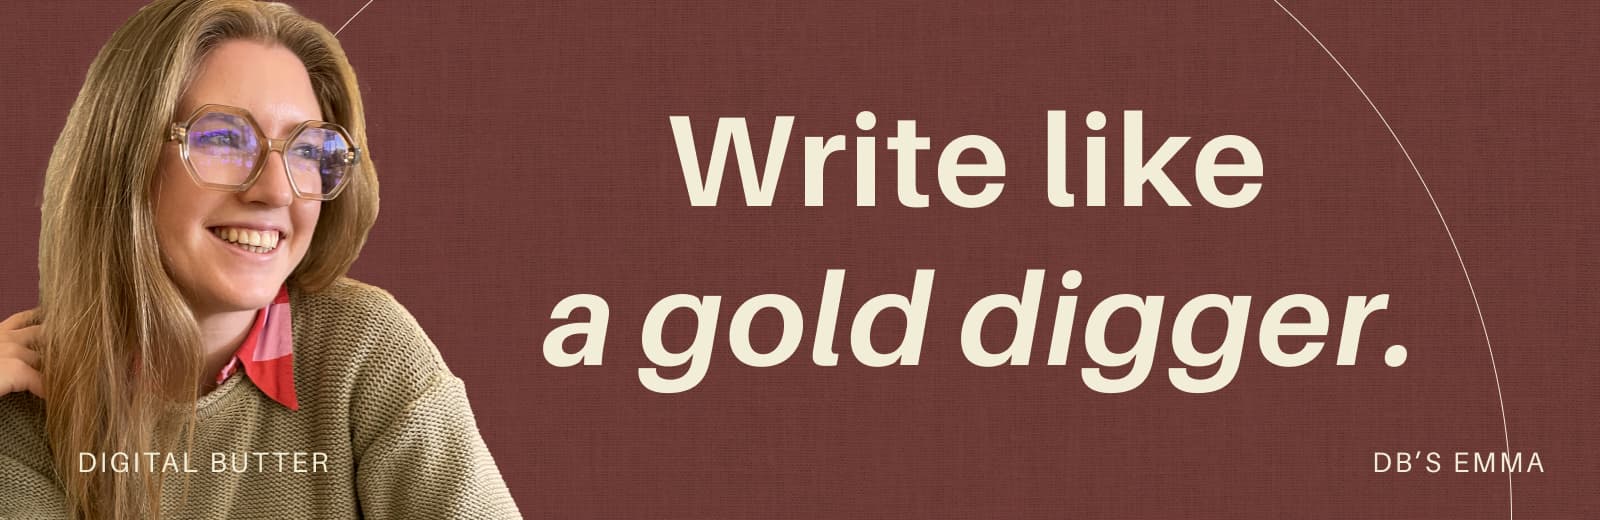 copywriting tips finding gold in testimonials